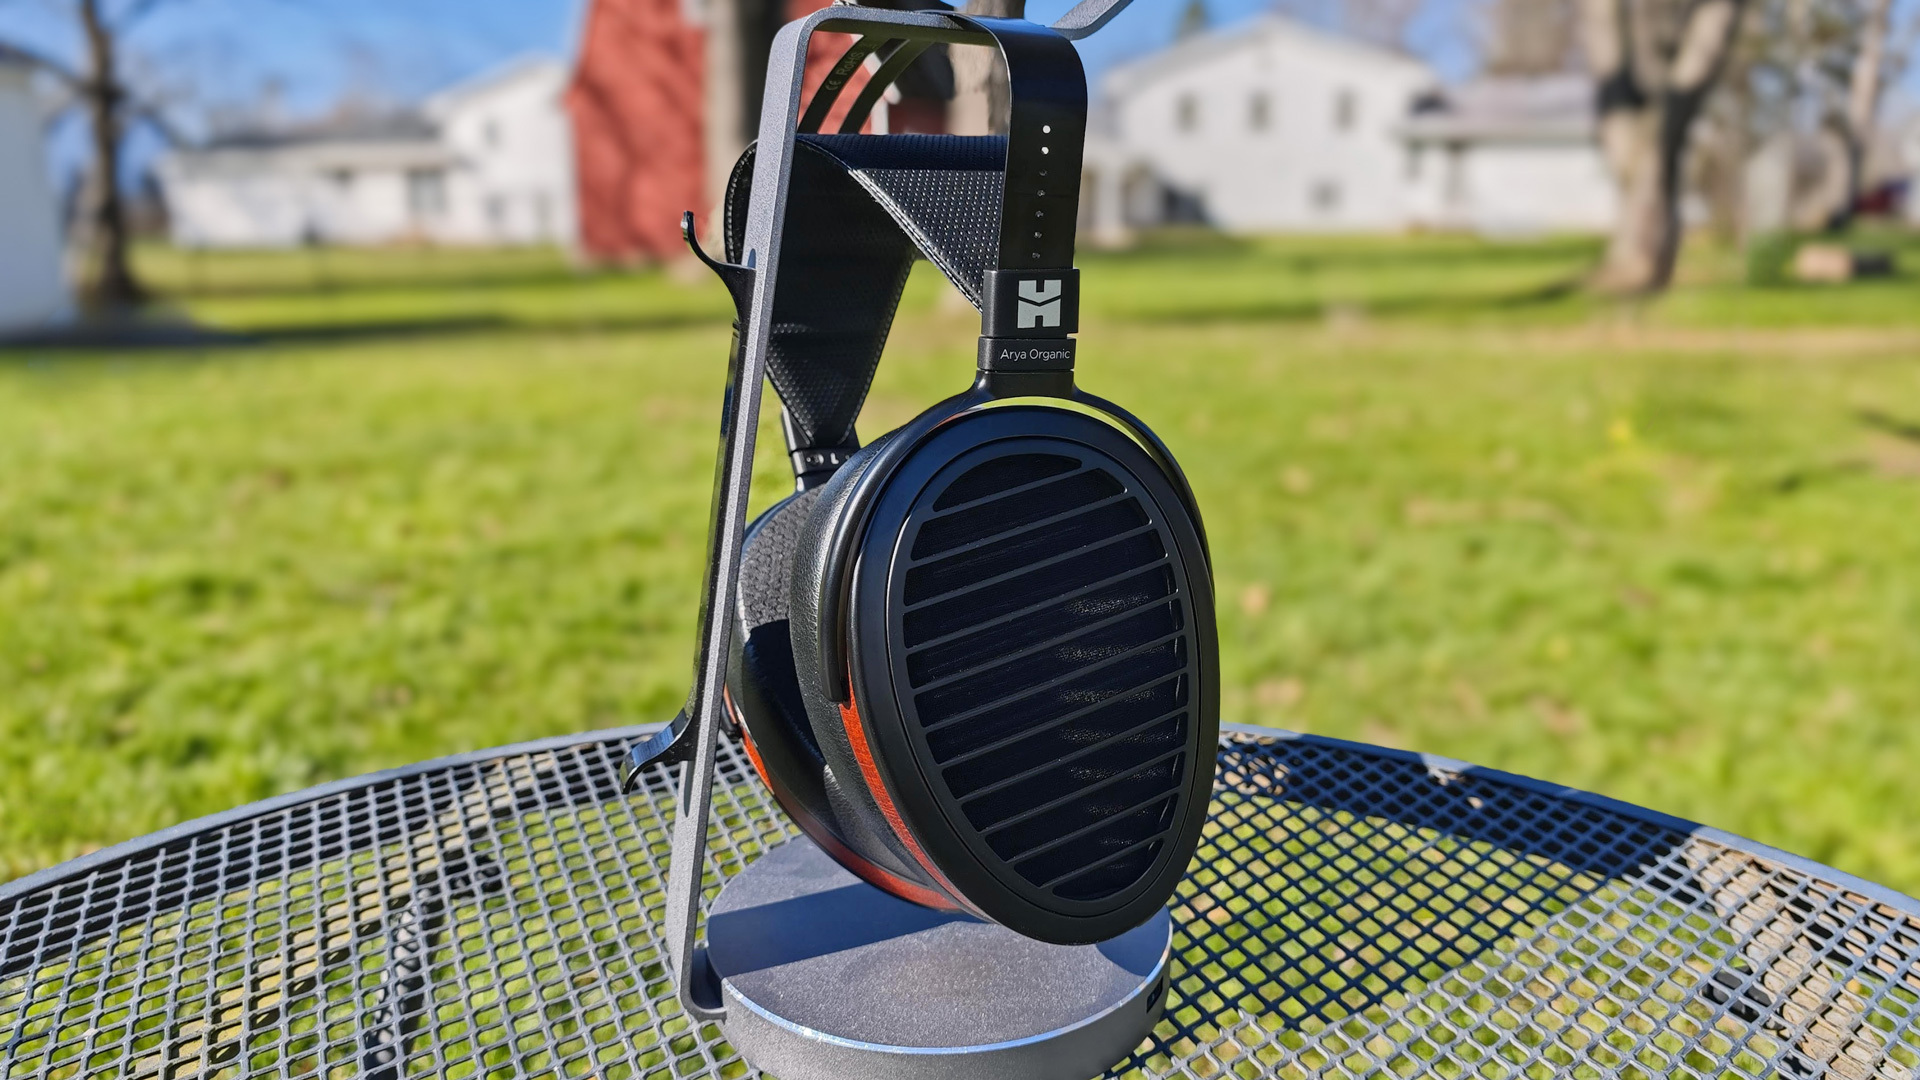 HiFiMAN-Arya-Organic headphones outside on a stand.